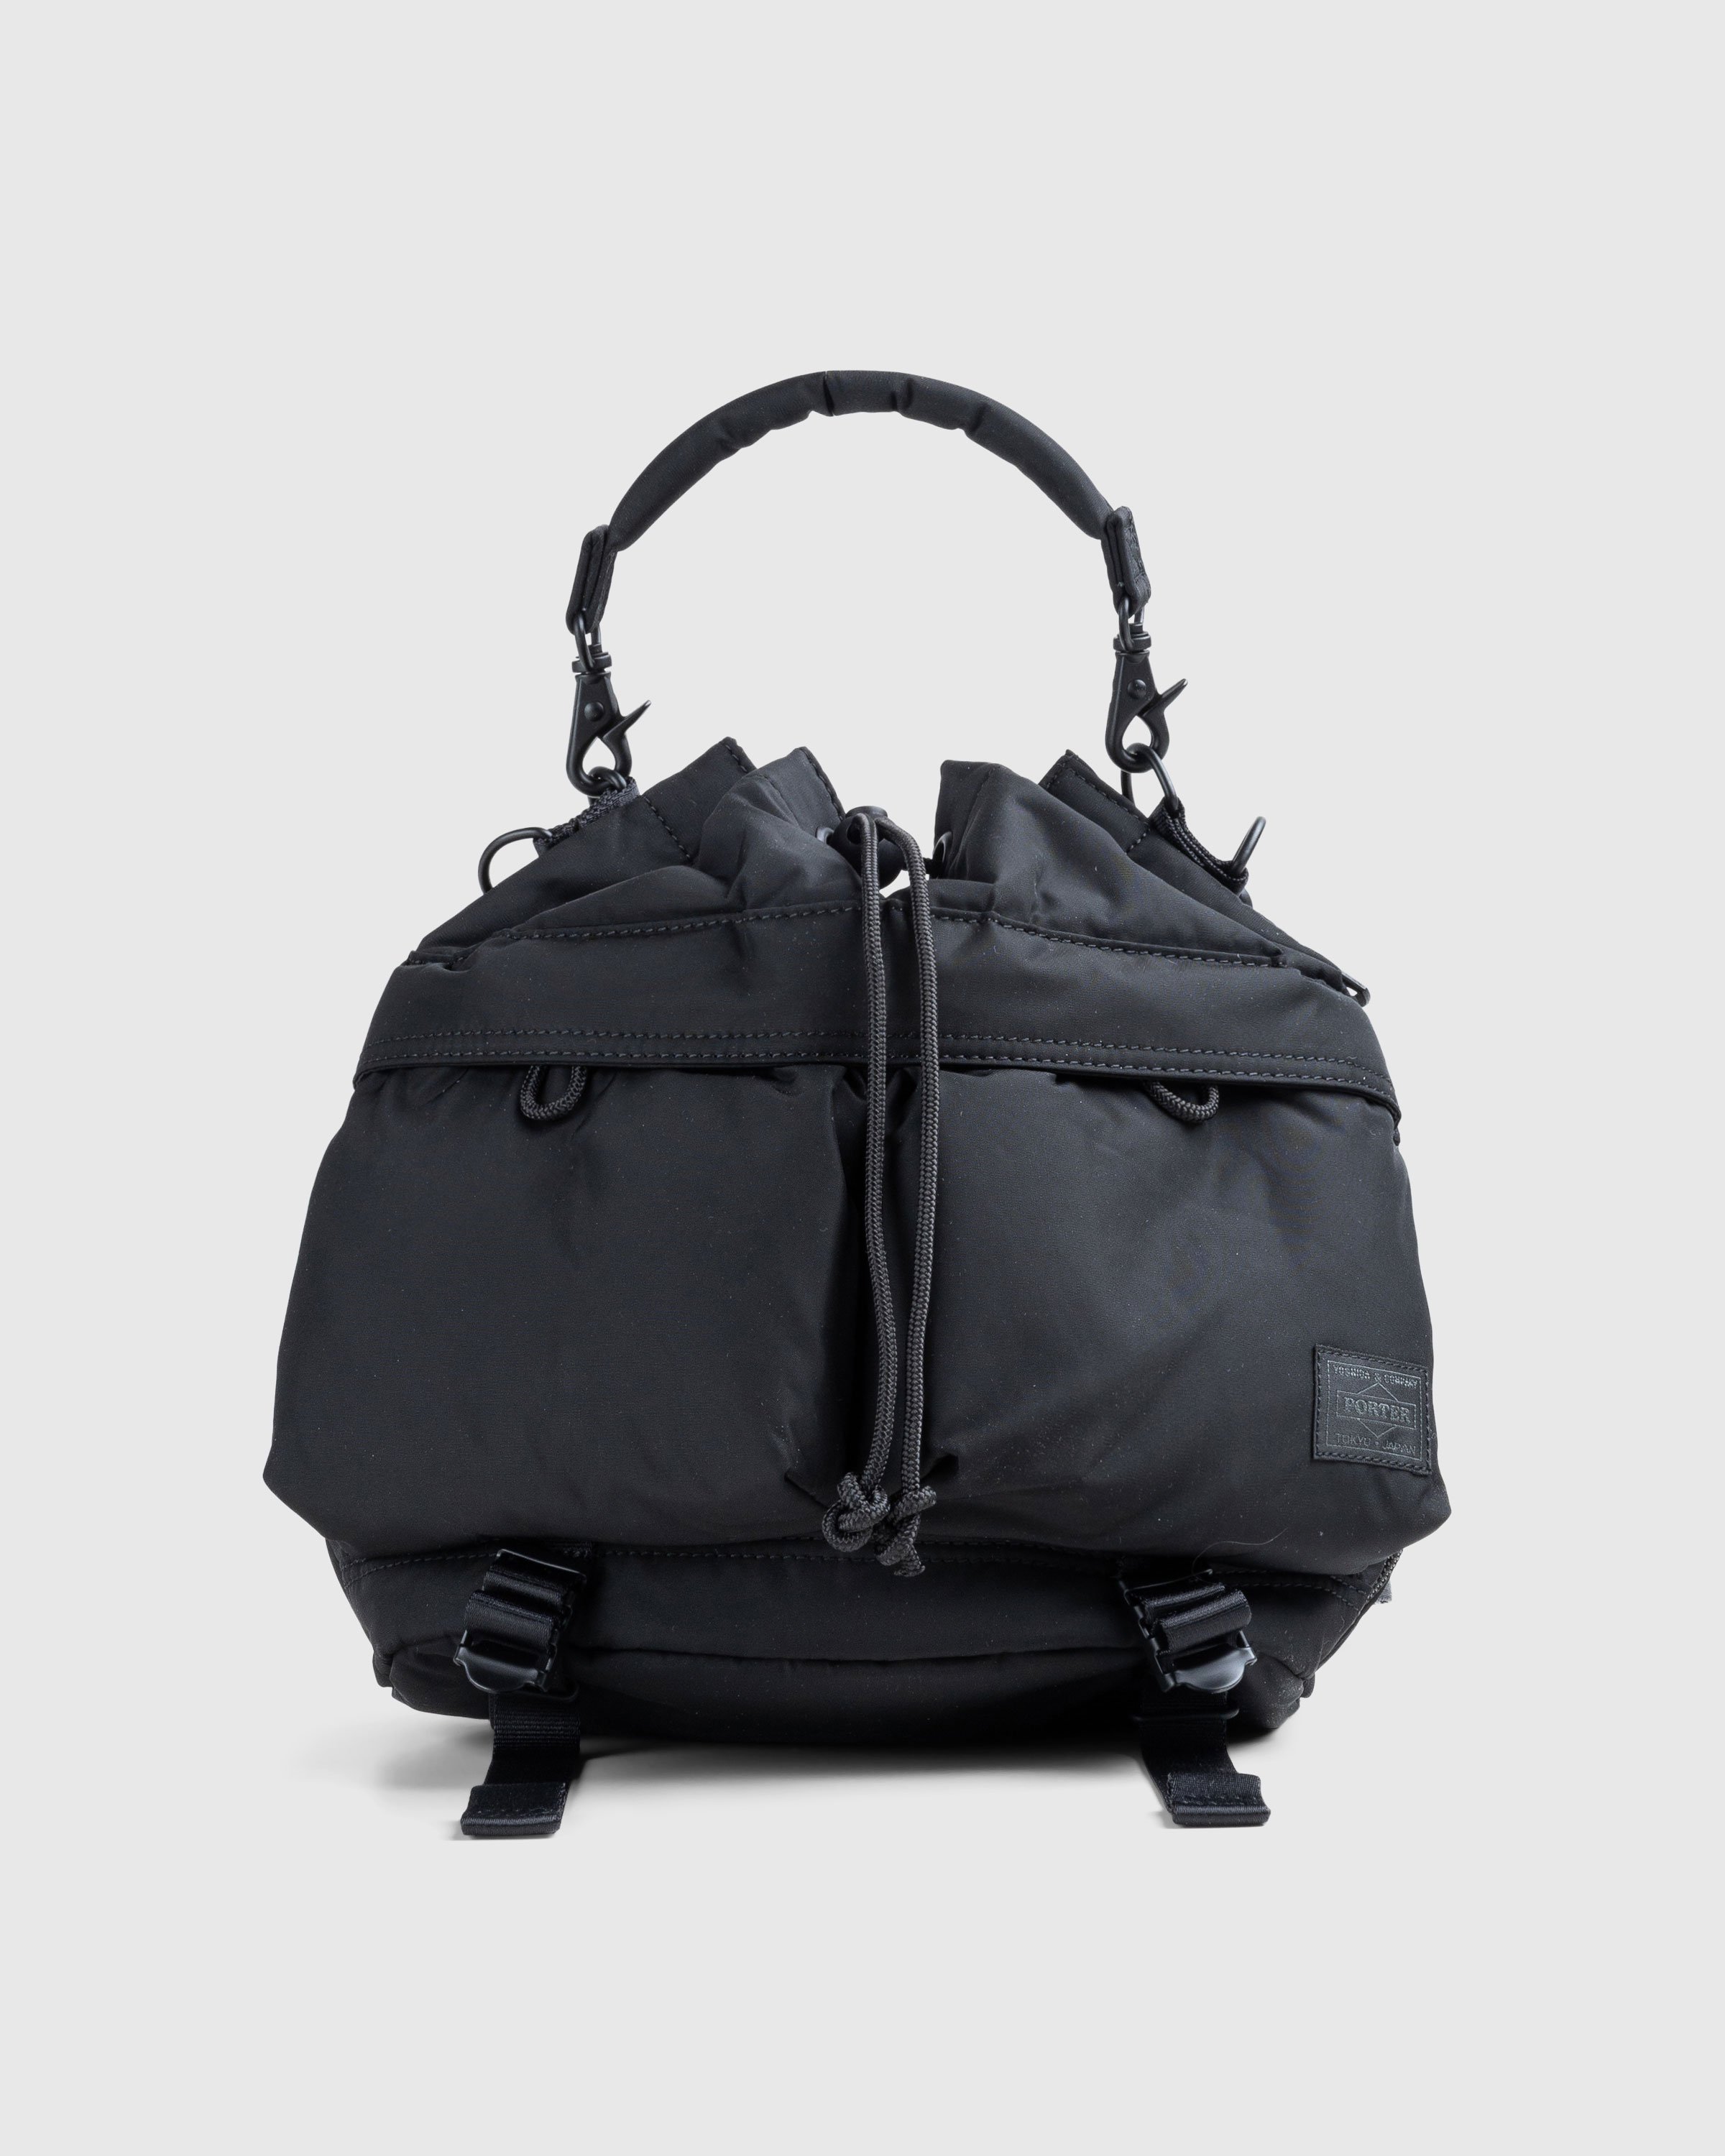 Porter-Yoshida & Co. - SENSES TOOL BAG - Accessories - Black - Image 1